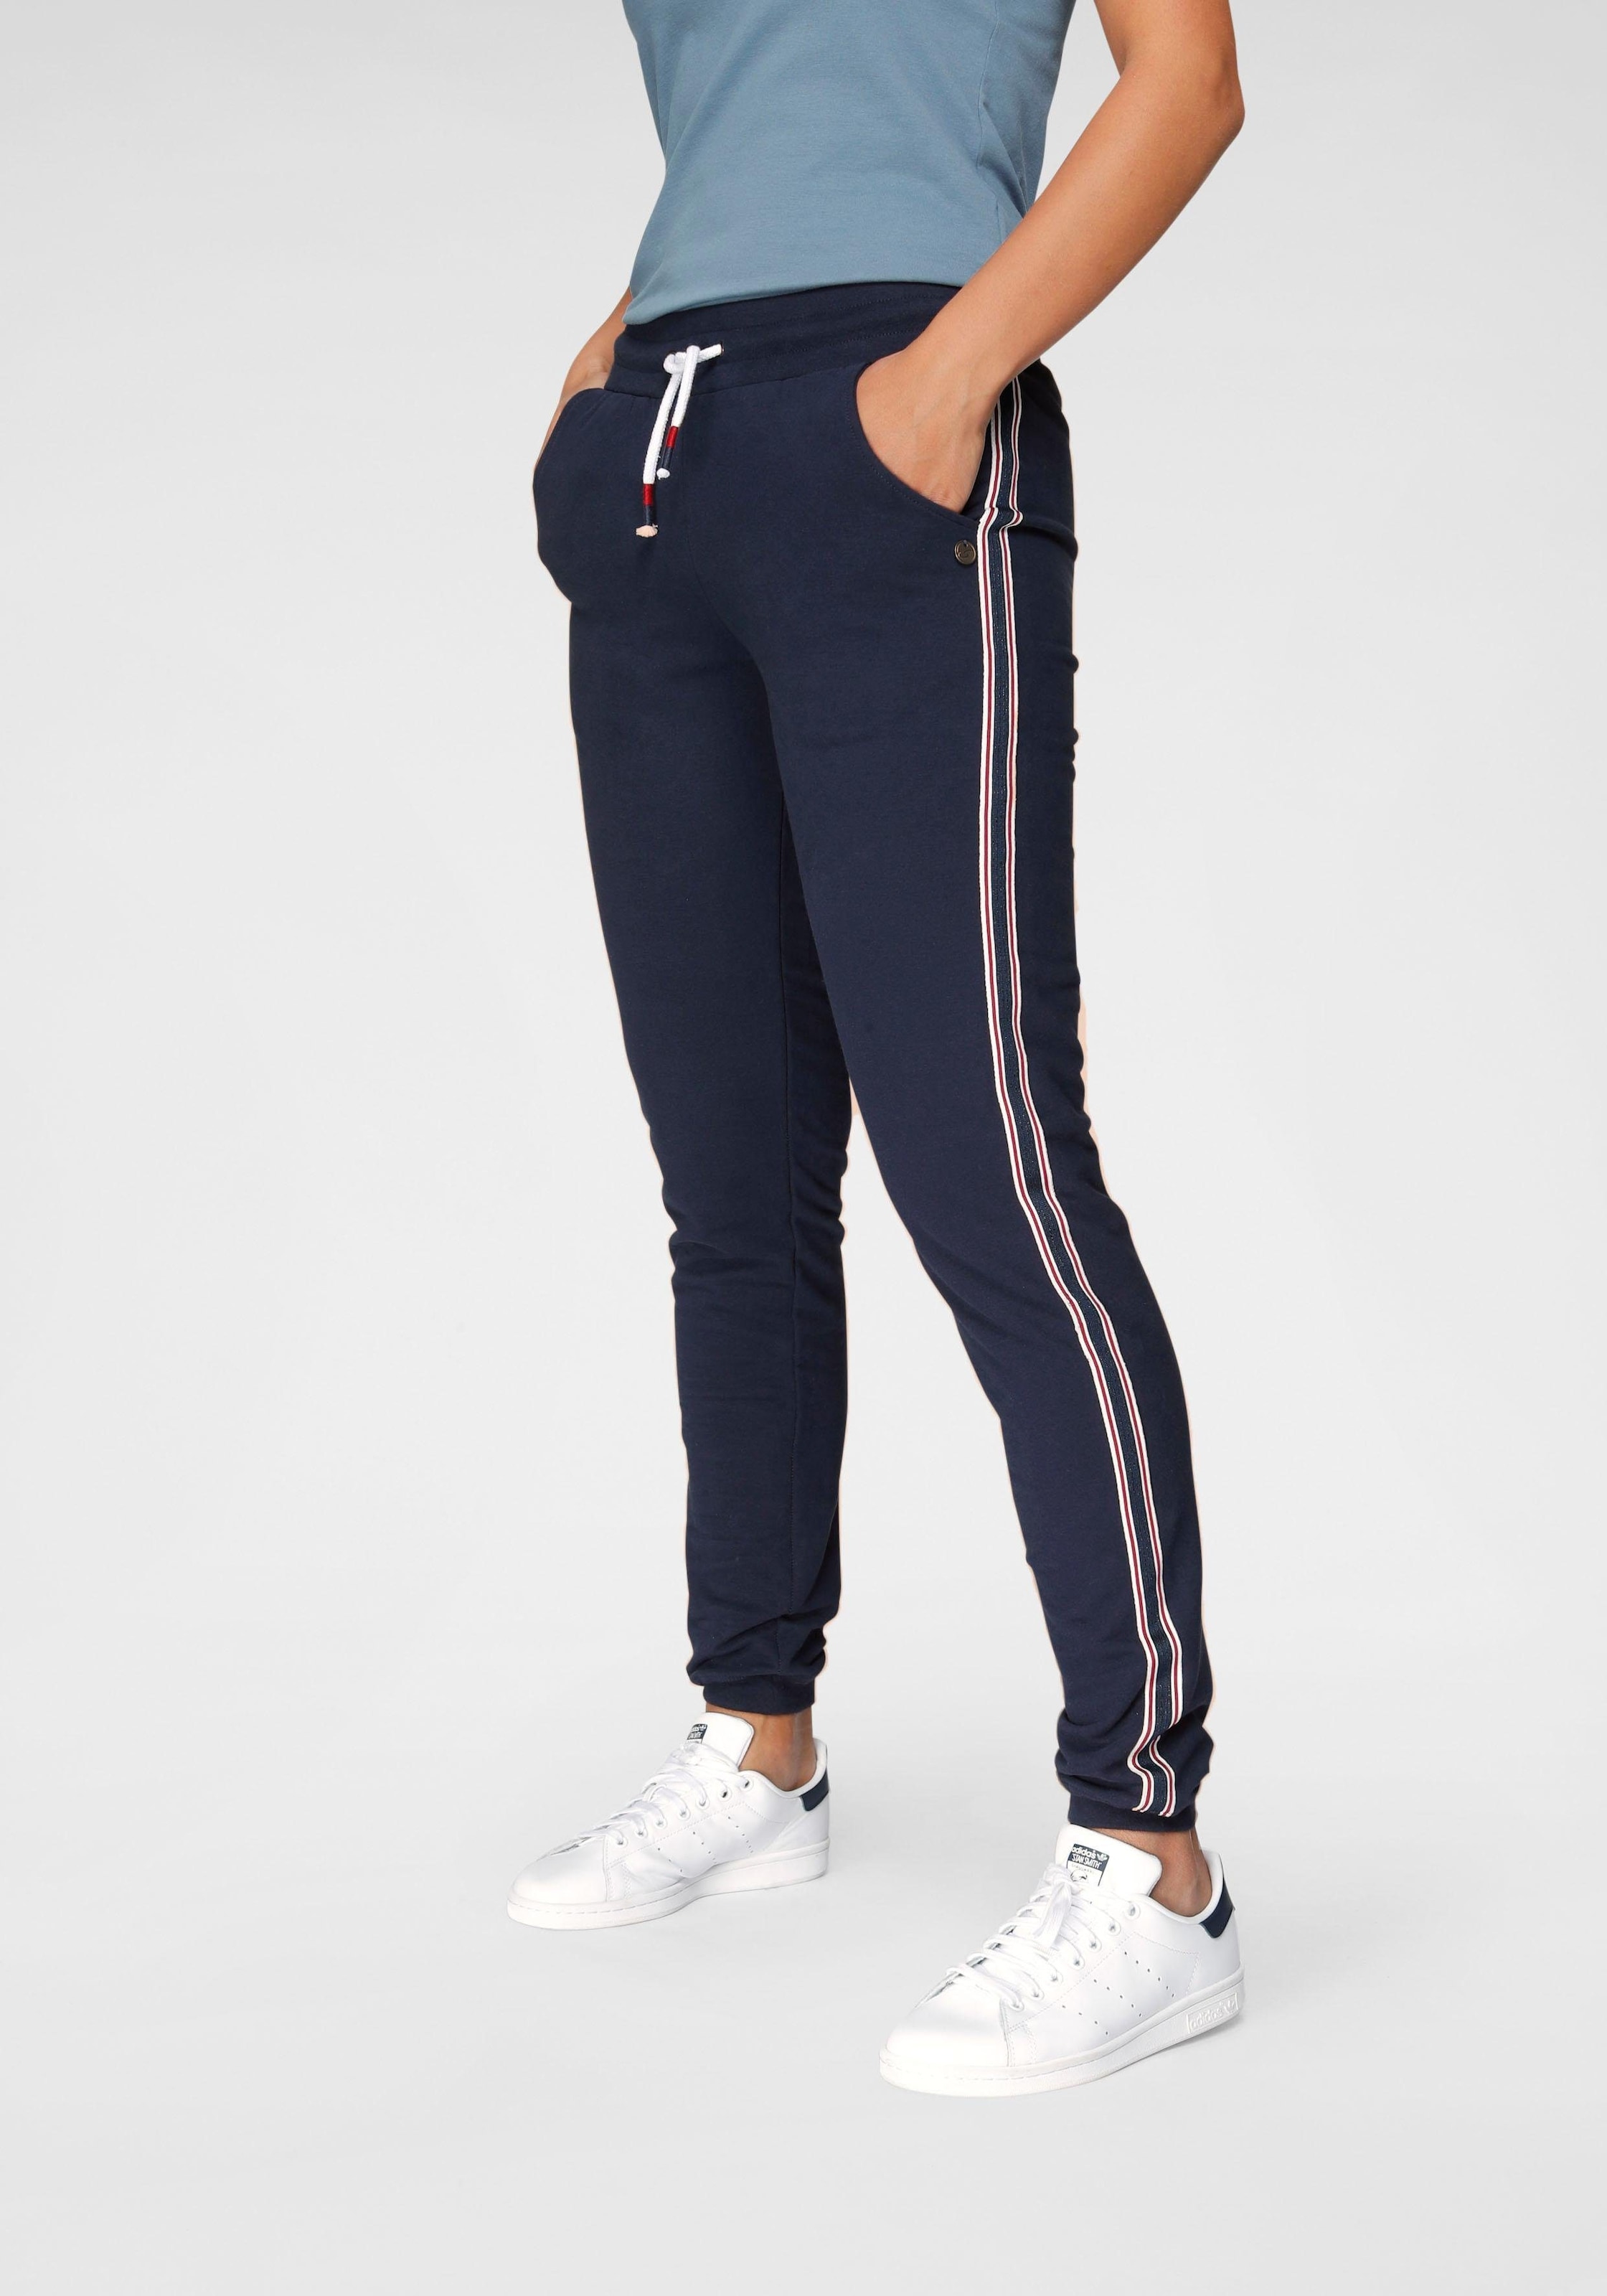 Ocean Sportswear Jogginghose »Slim Fit«, mit Tapestreifen | kaufen I\'m walking